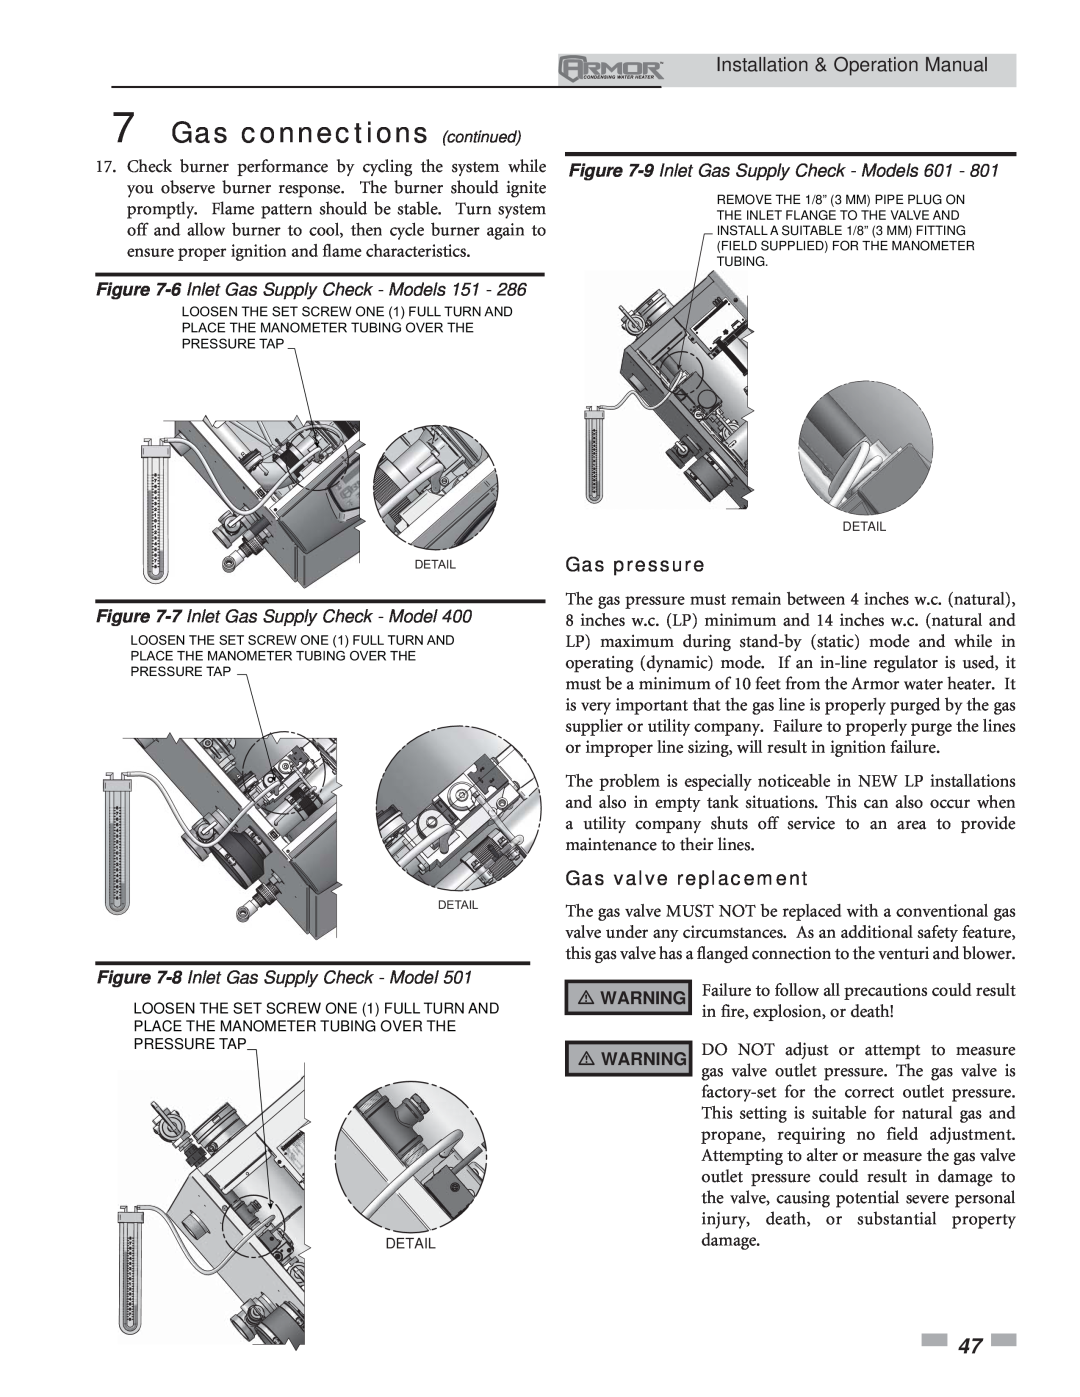 Lochinvar Gas pressure, Gas valve replacement, 6 Inlet Gas Supply Check - Models 151, 7 Inlet Gas Supply Check - Model 